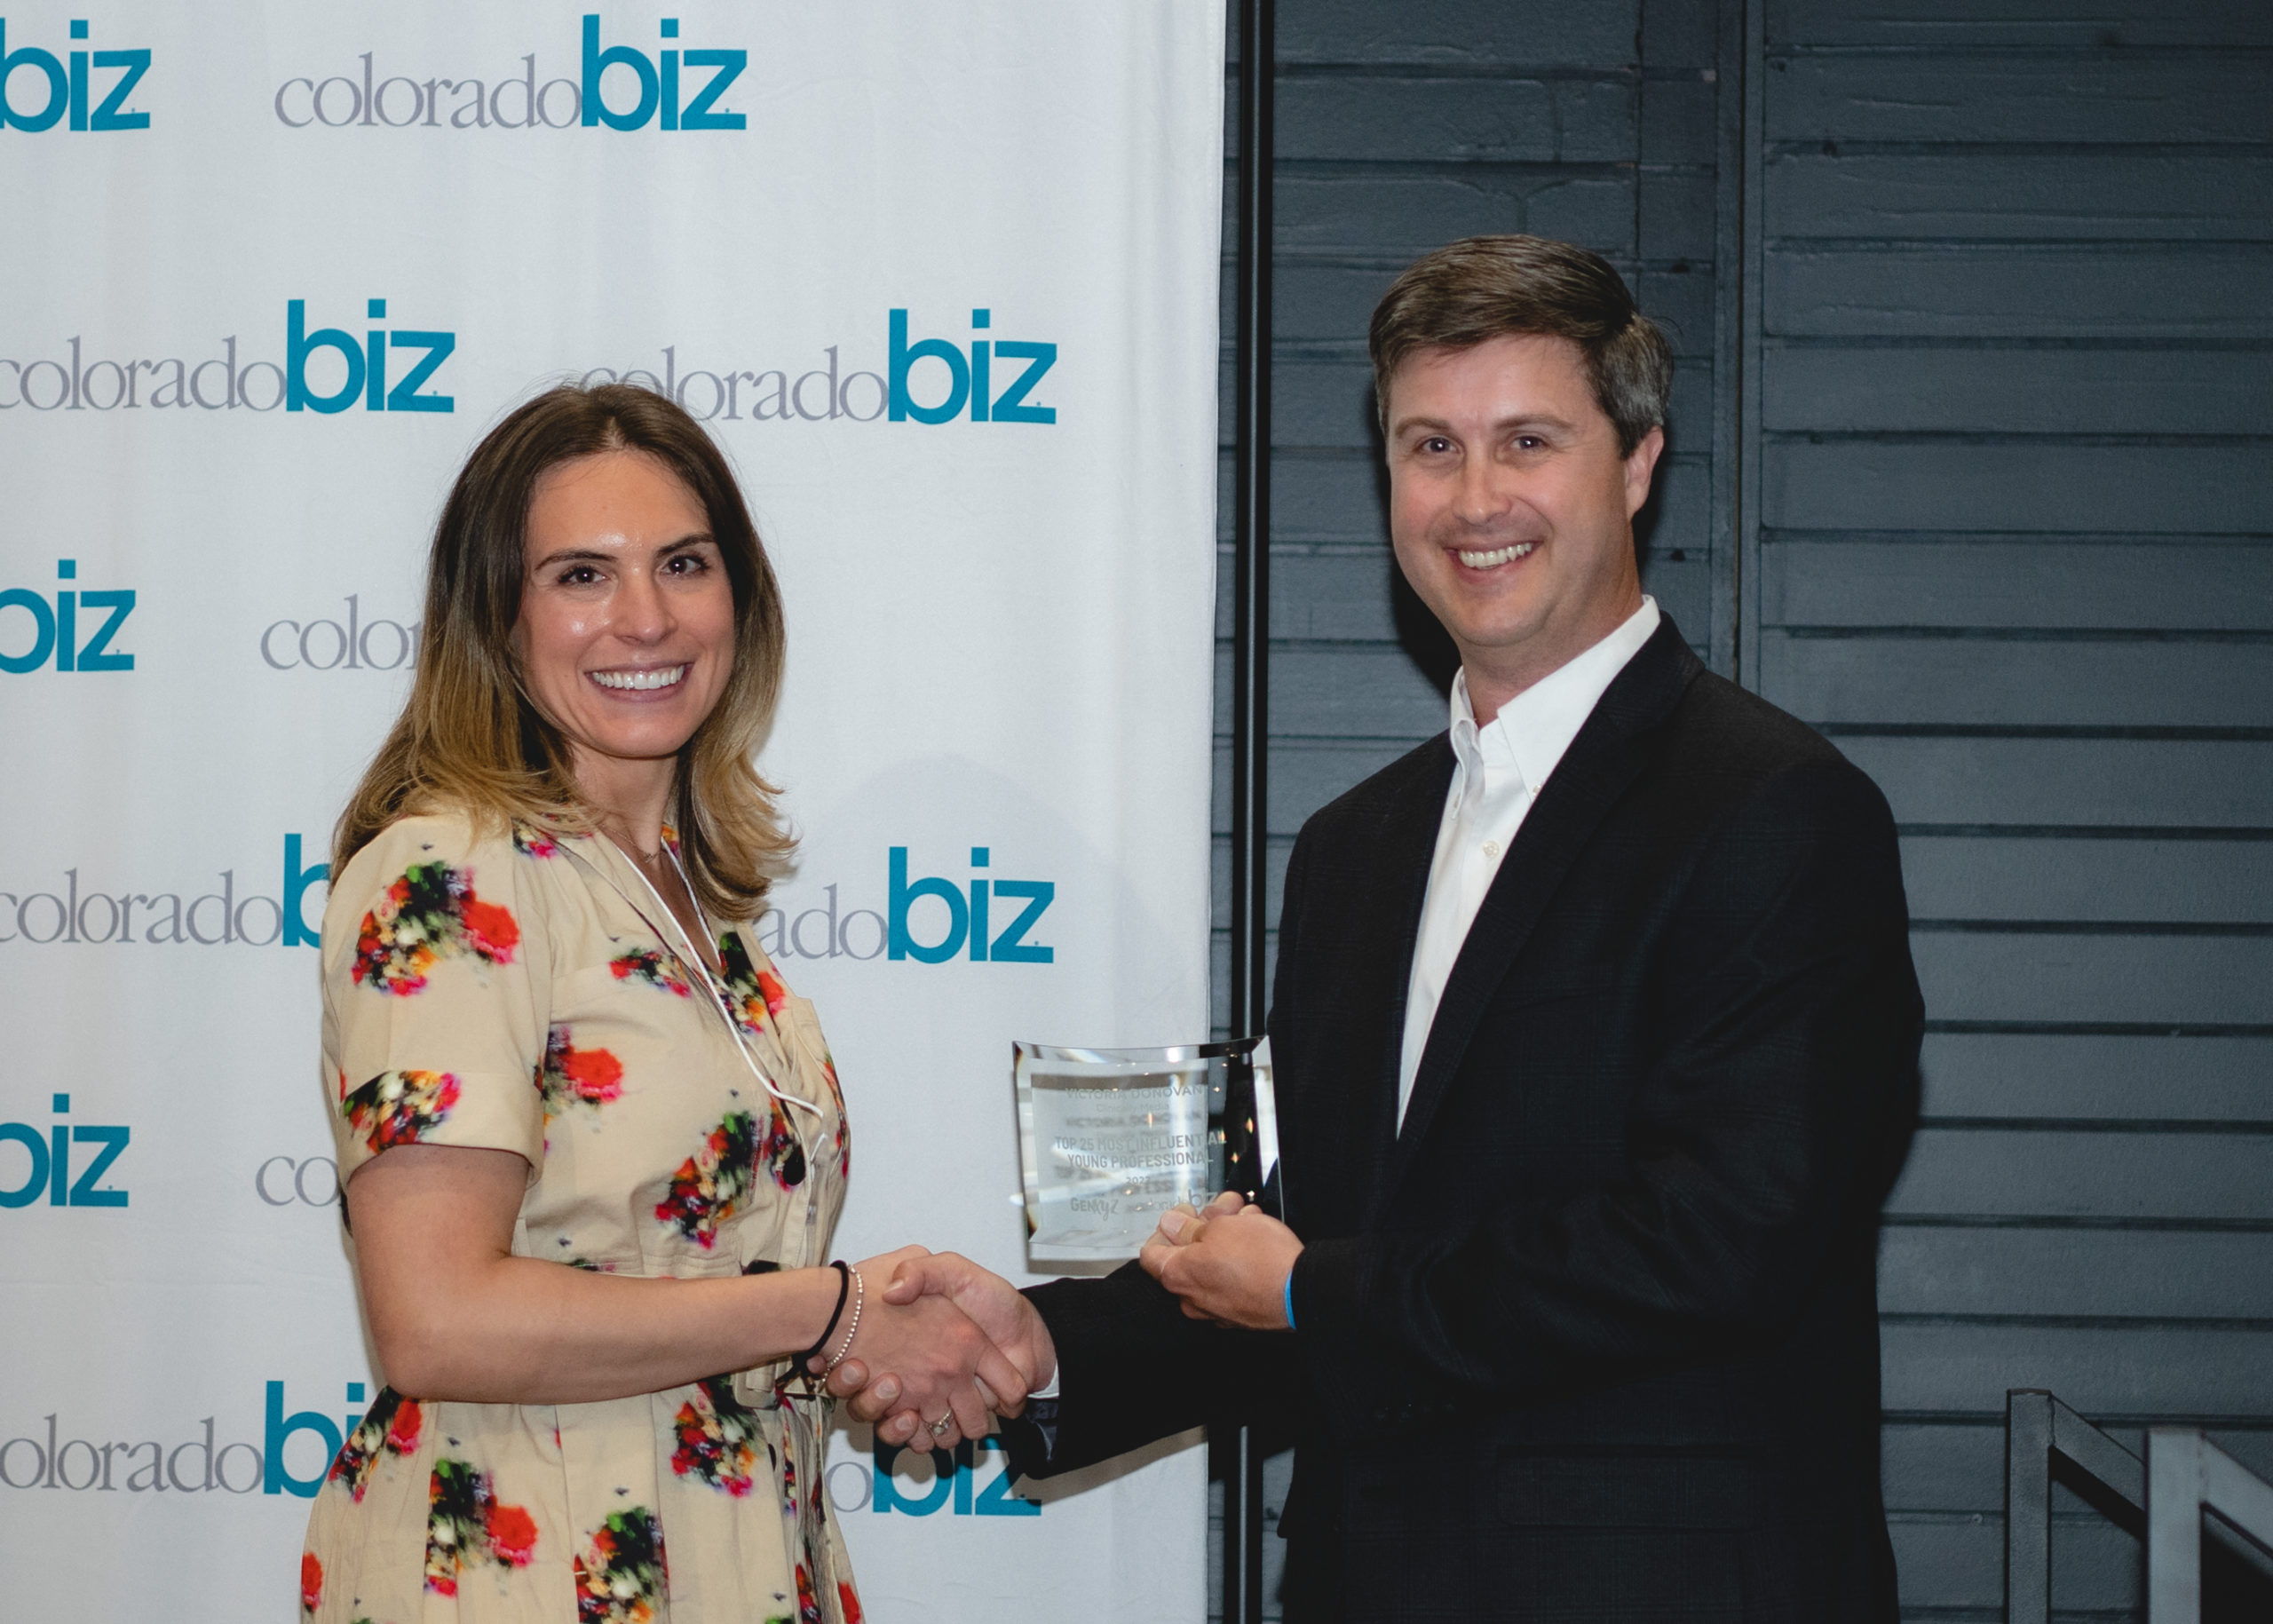 Victoria Donovan receives ColoradBiz GenXYZ Award for Top 25 Most Influential Young Professionals